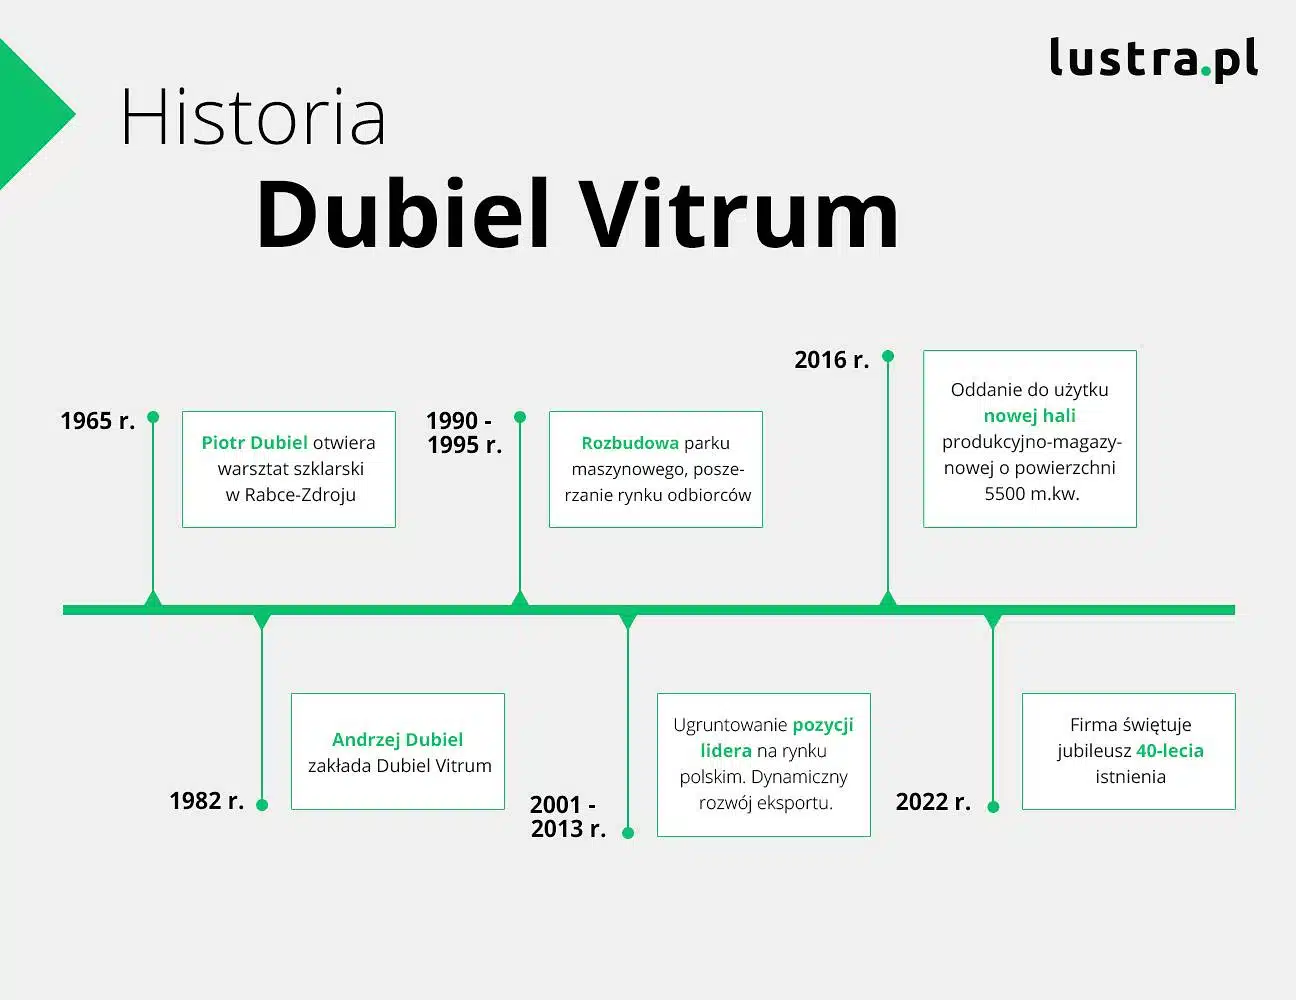 3.historia_dubiel_vitrum.jpg